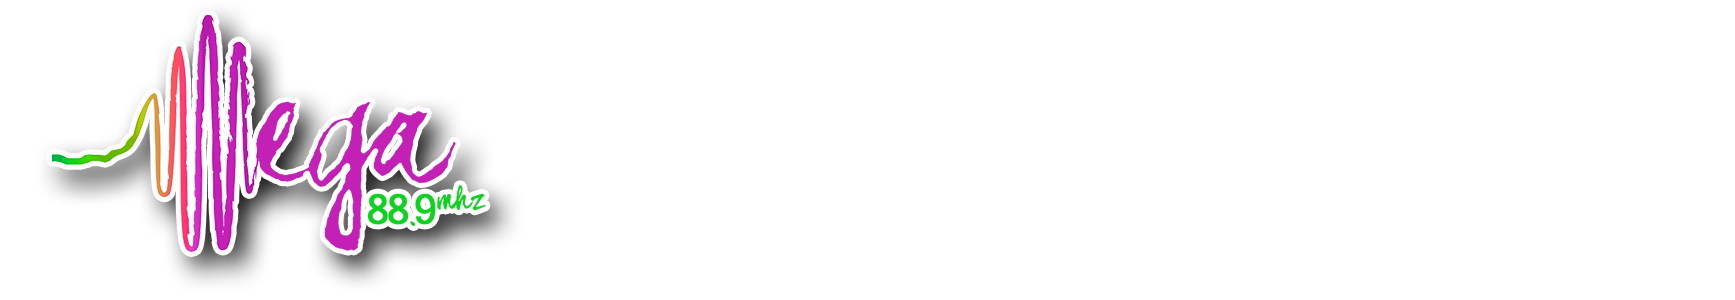 La Mega Romang TV logo